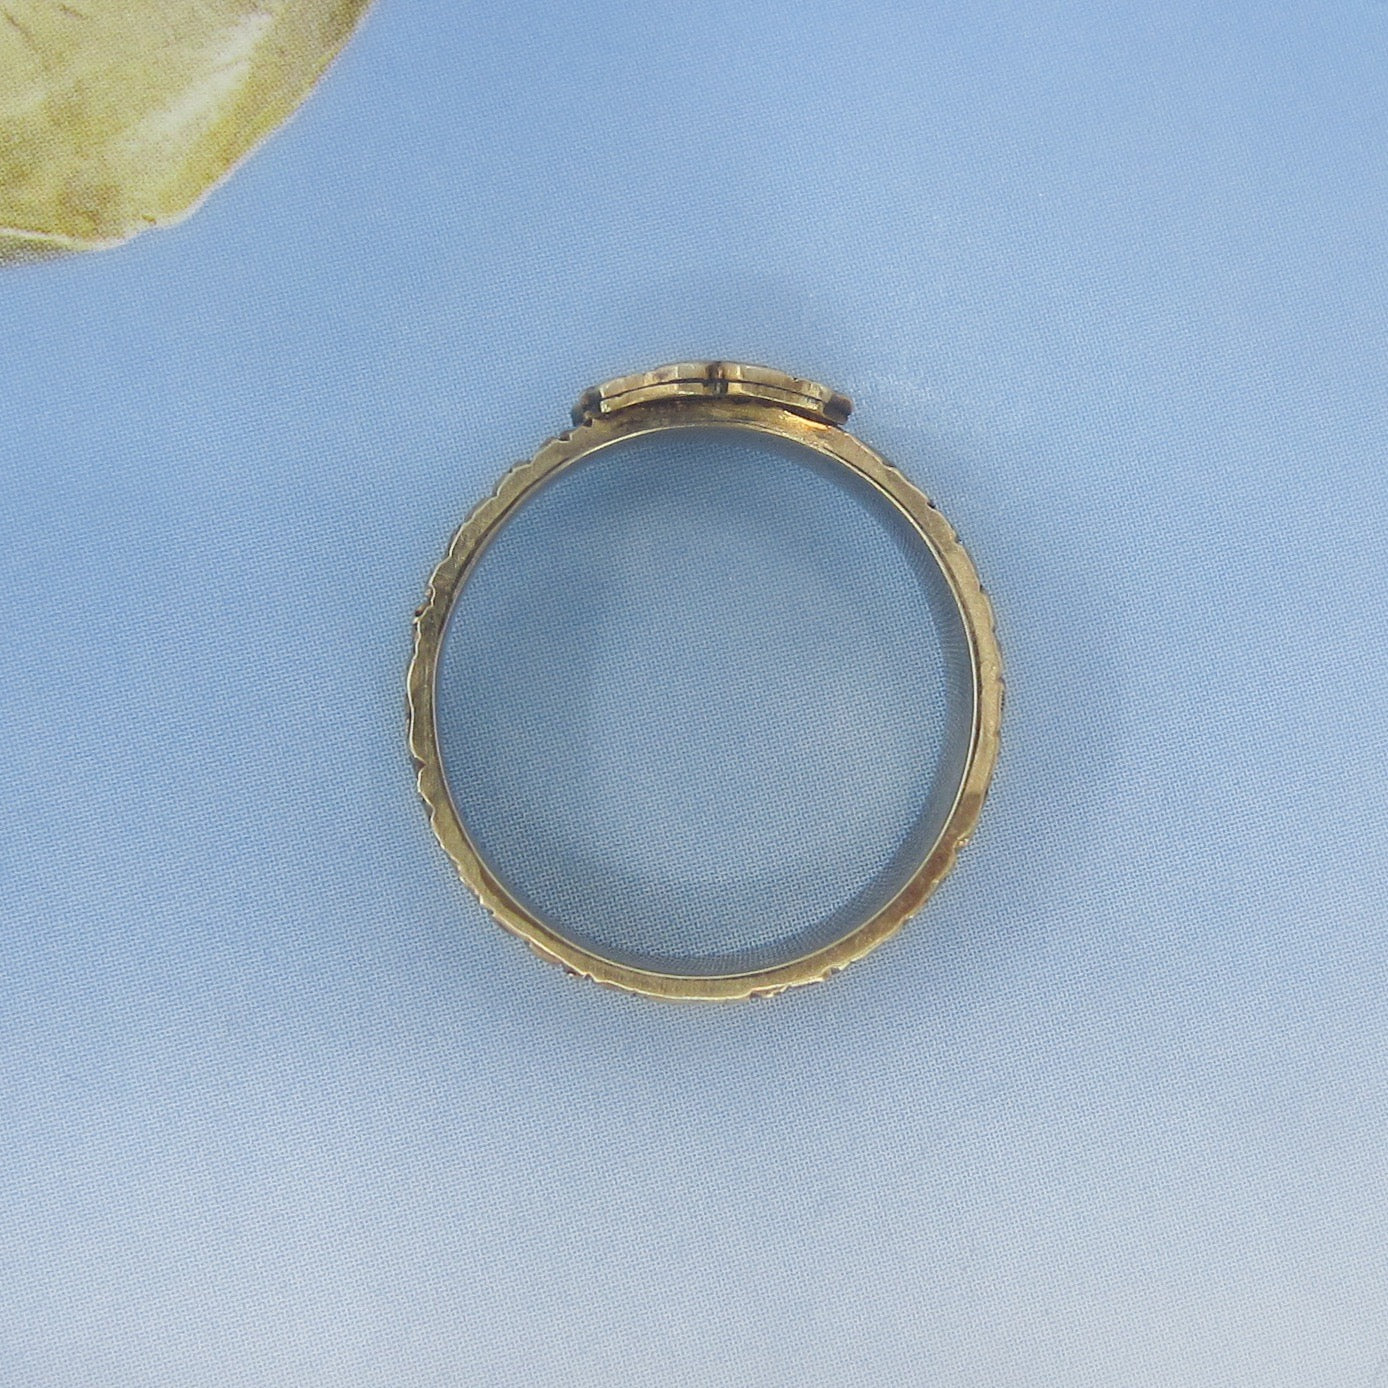 HOLD-Victorian Enamel Hair Mourning Ring 15k, Size 8 c. 1870